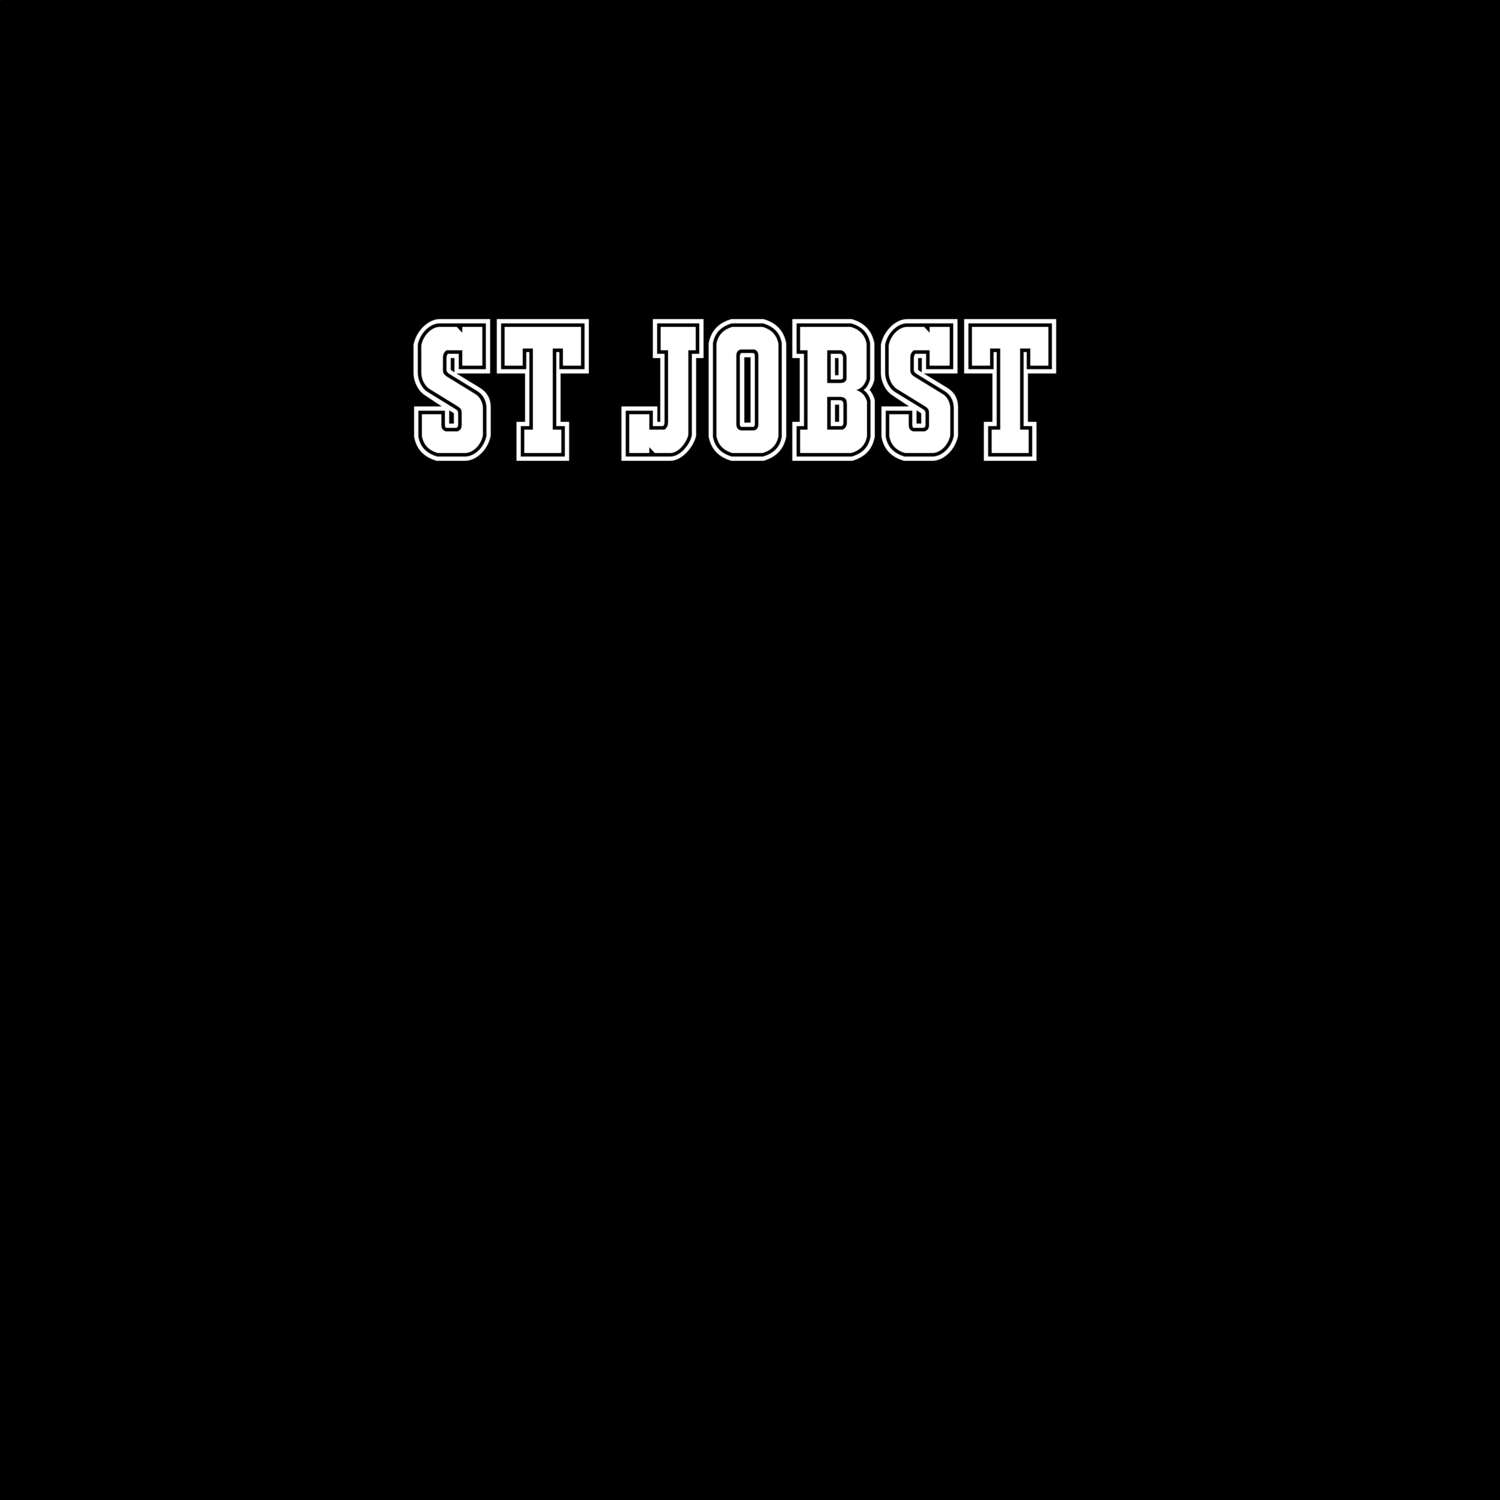 St Jobst T-Shirt »Classic«